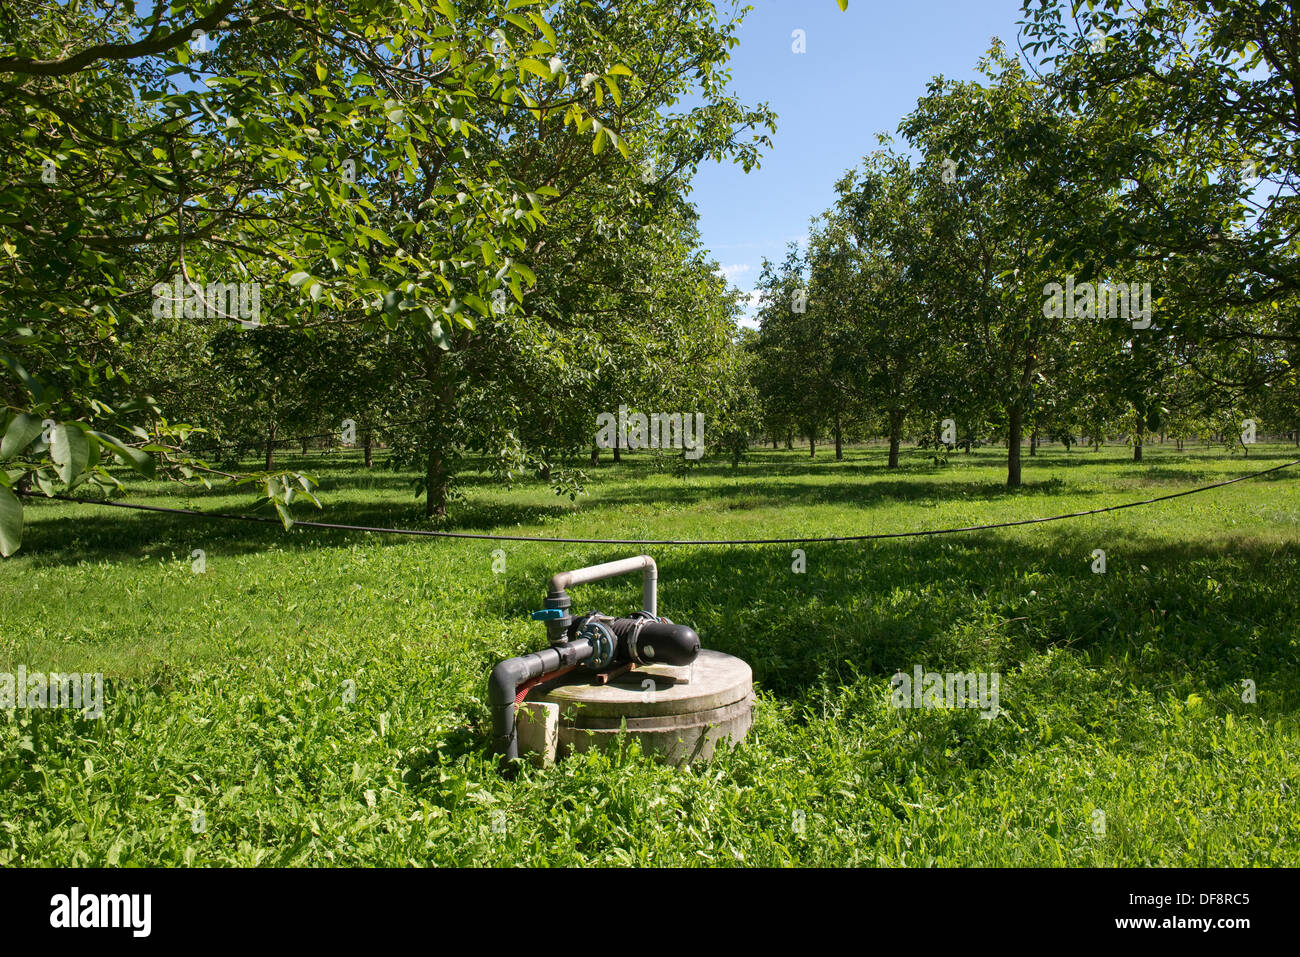 Irrigation and fertigation pump for walnut trees in a walnut orchard at Sainte-Foy-la-Grande, France Stock Photo